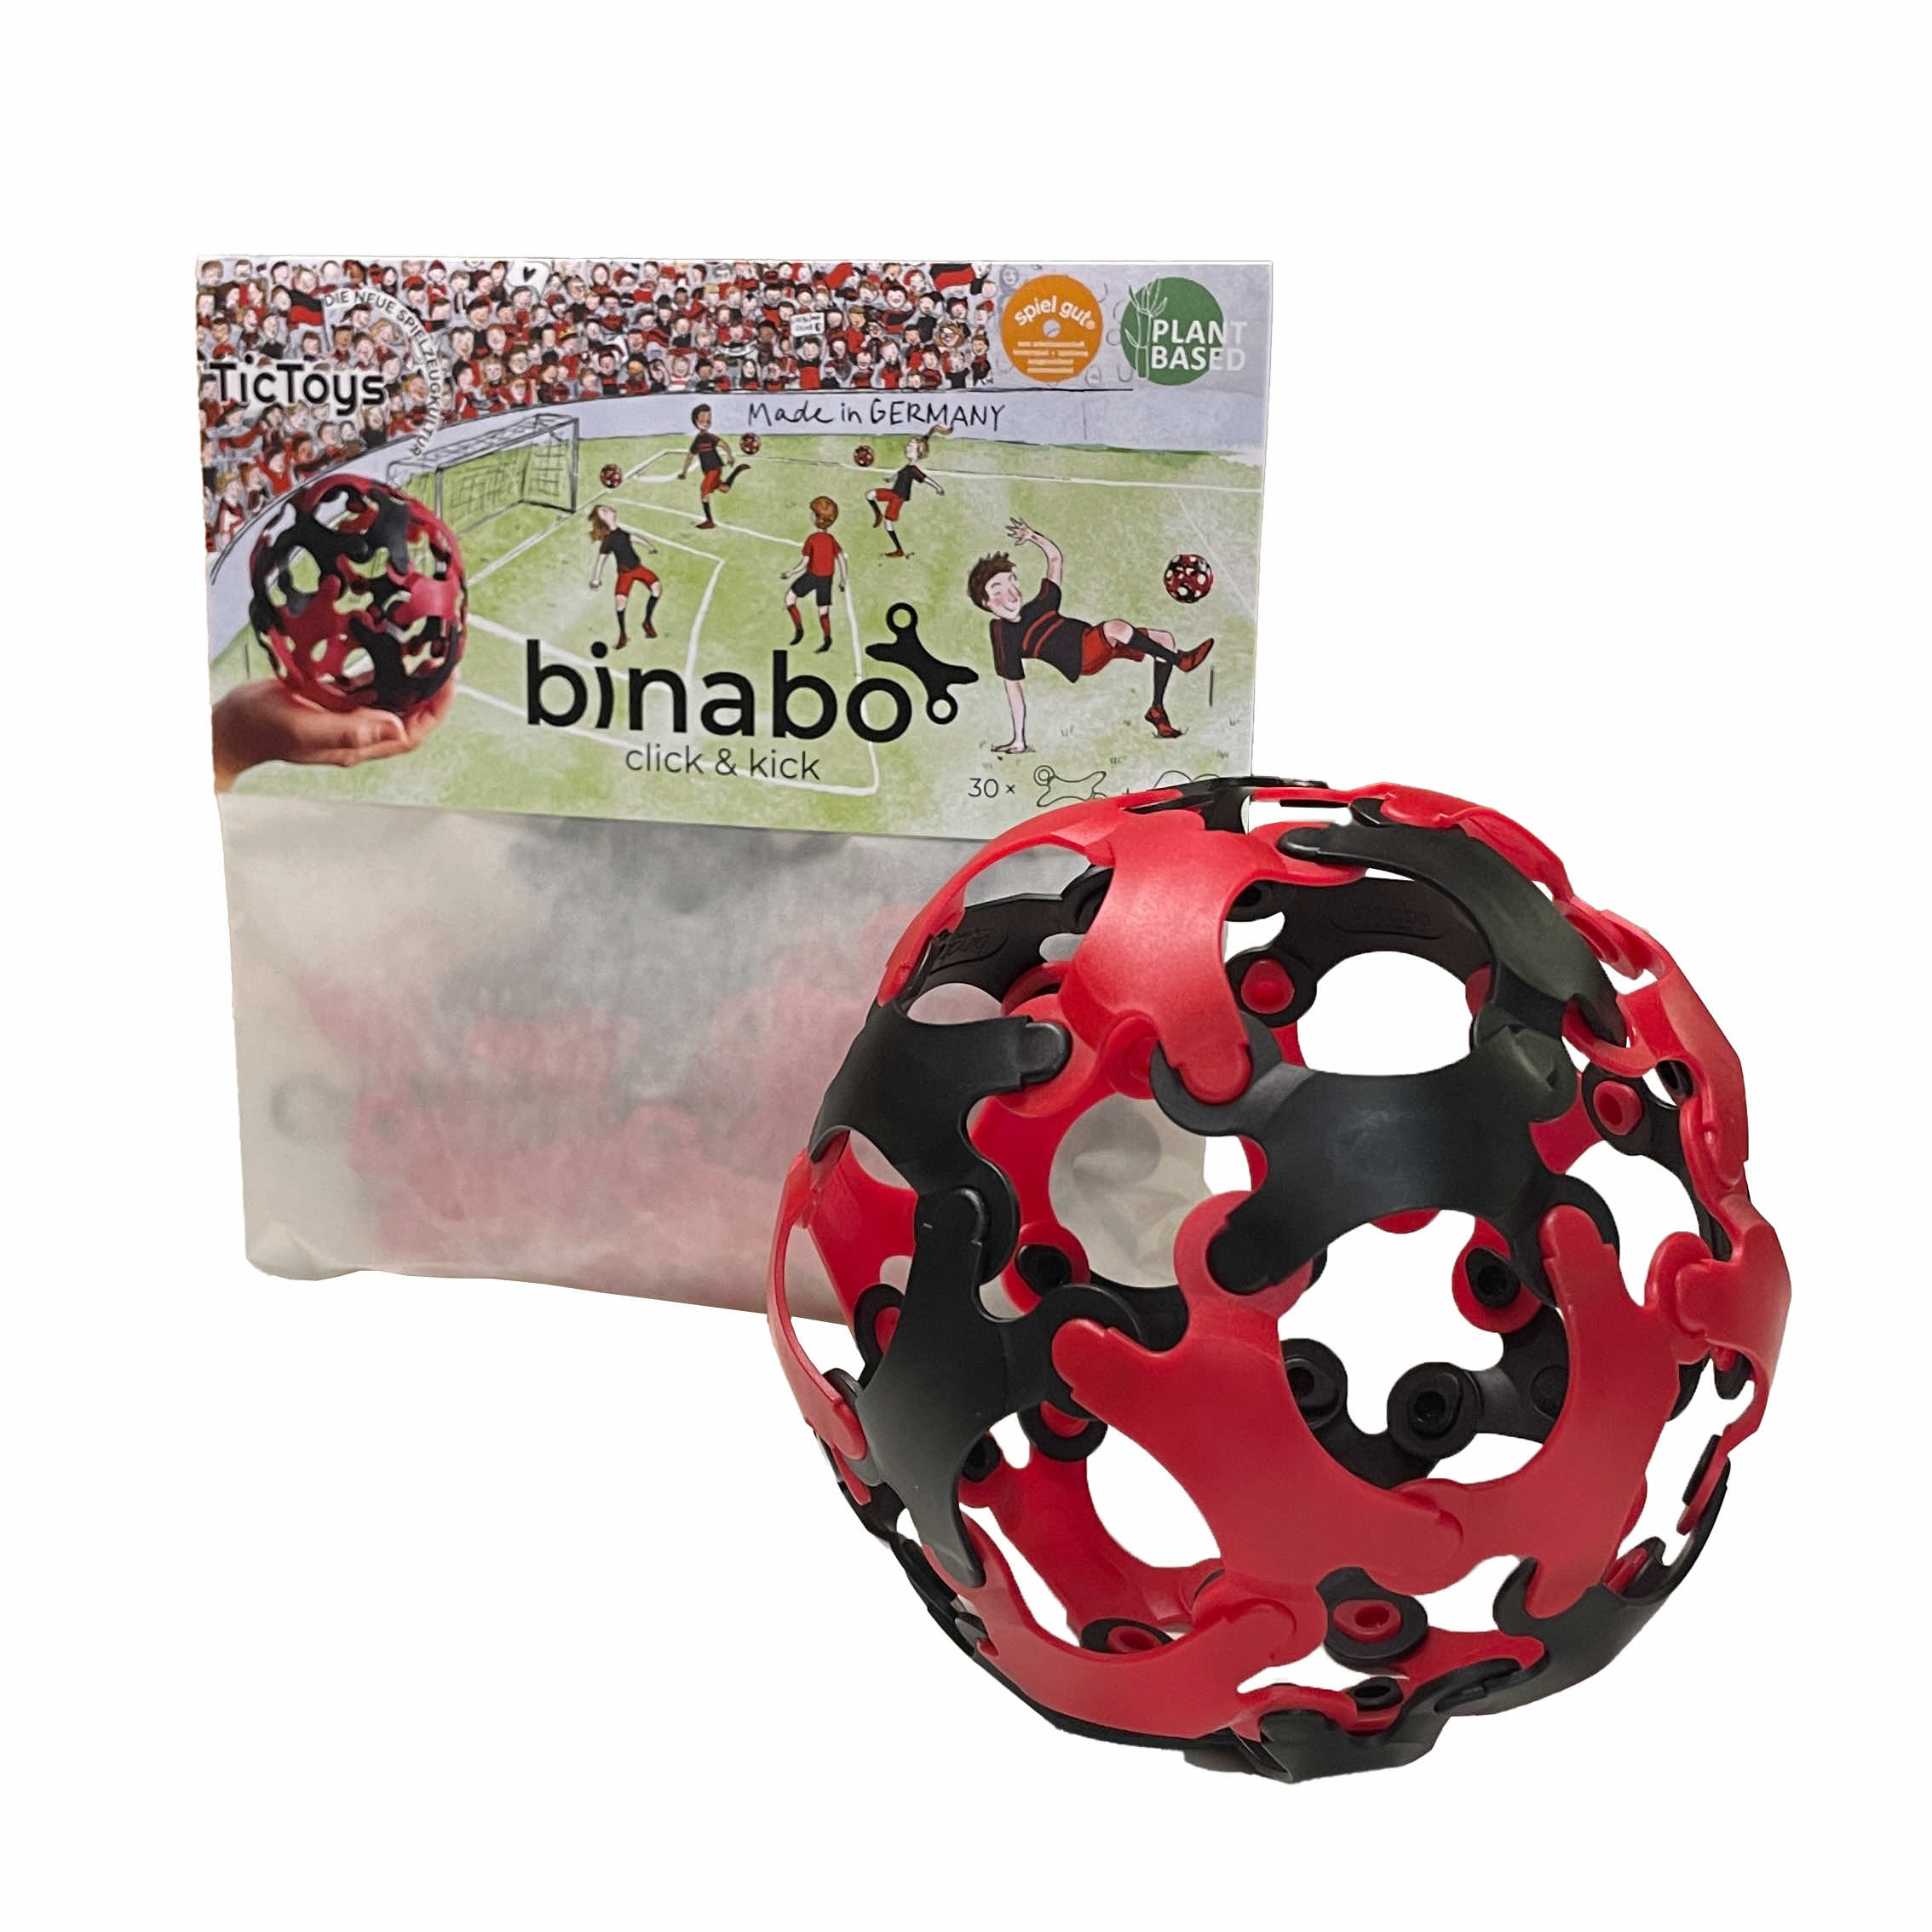 Binabo “click & kick“ rot & schwarz